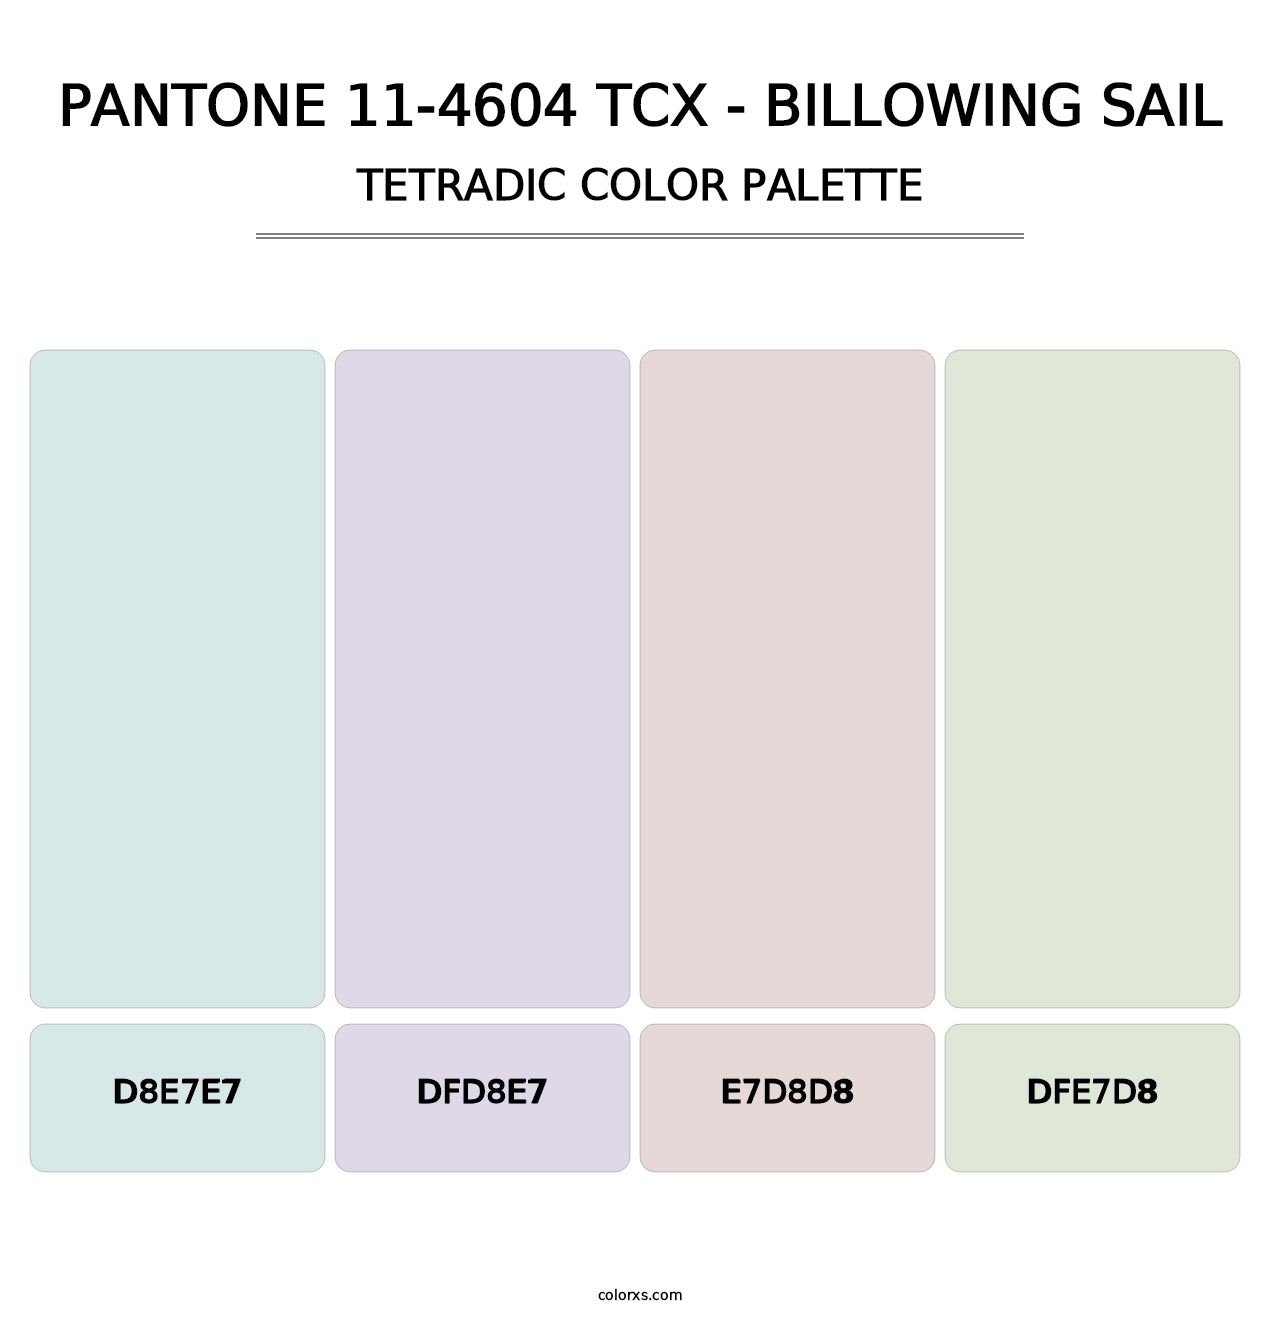 PANTONE 11-4604 TCX - Billowing Sail - Tetradic Color Palette